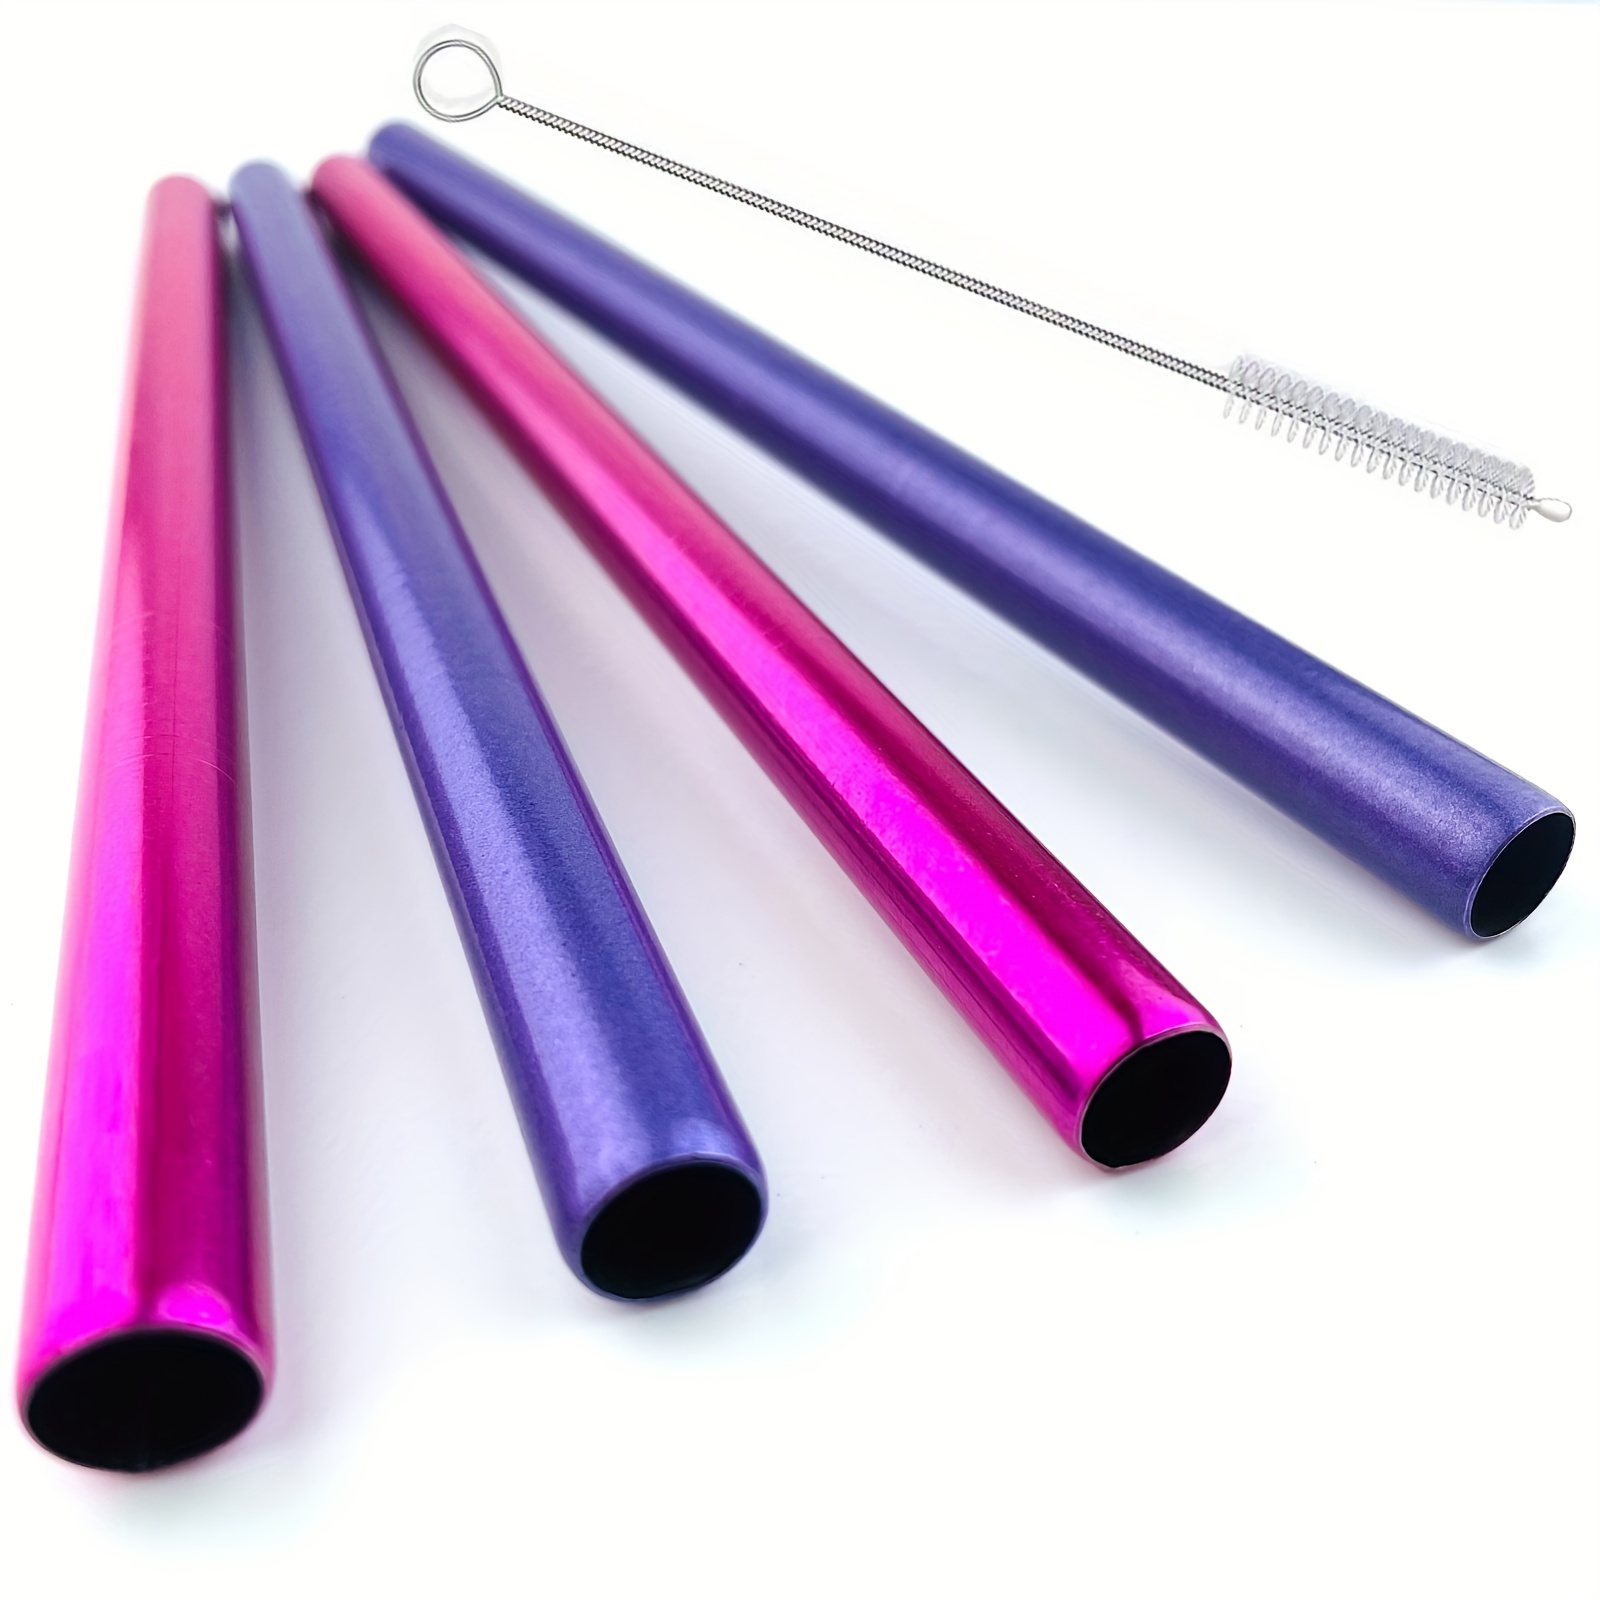 Reusable Boba Straws | Reusable Straws for Pearly DIY bubble tea kits!